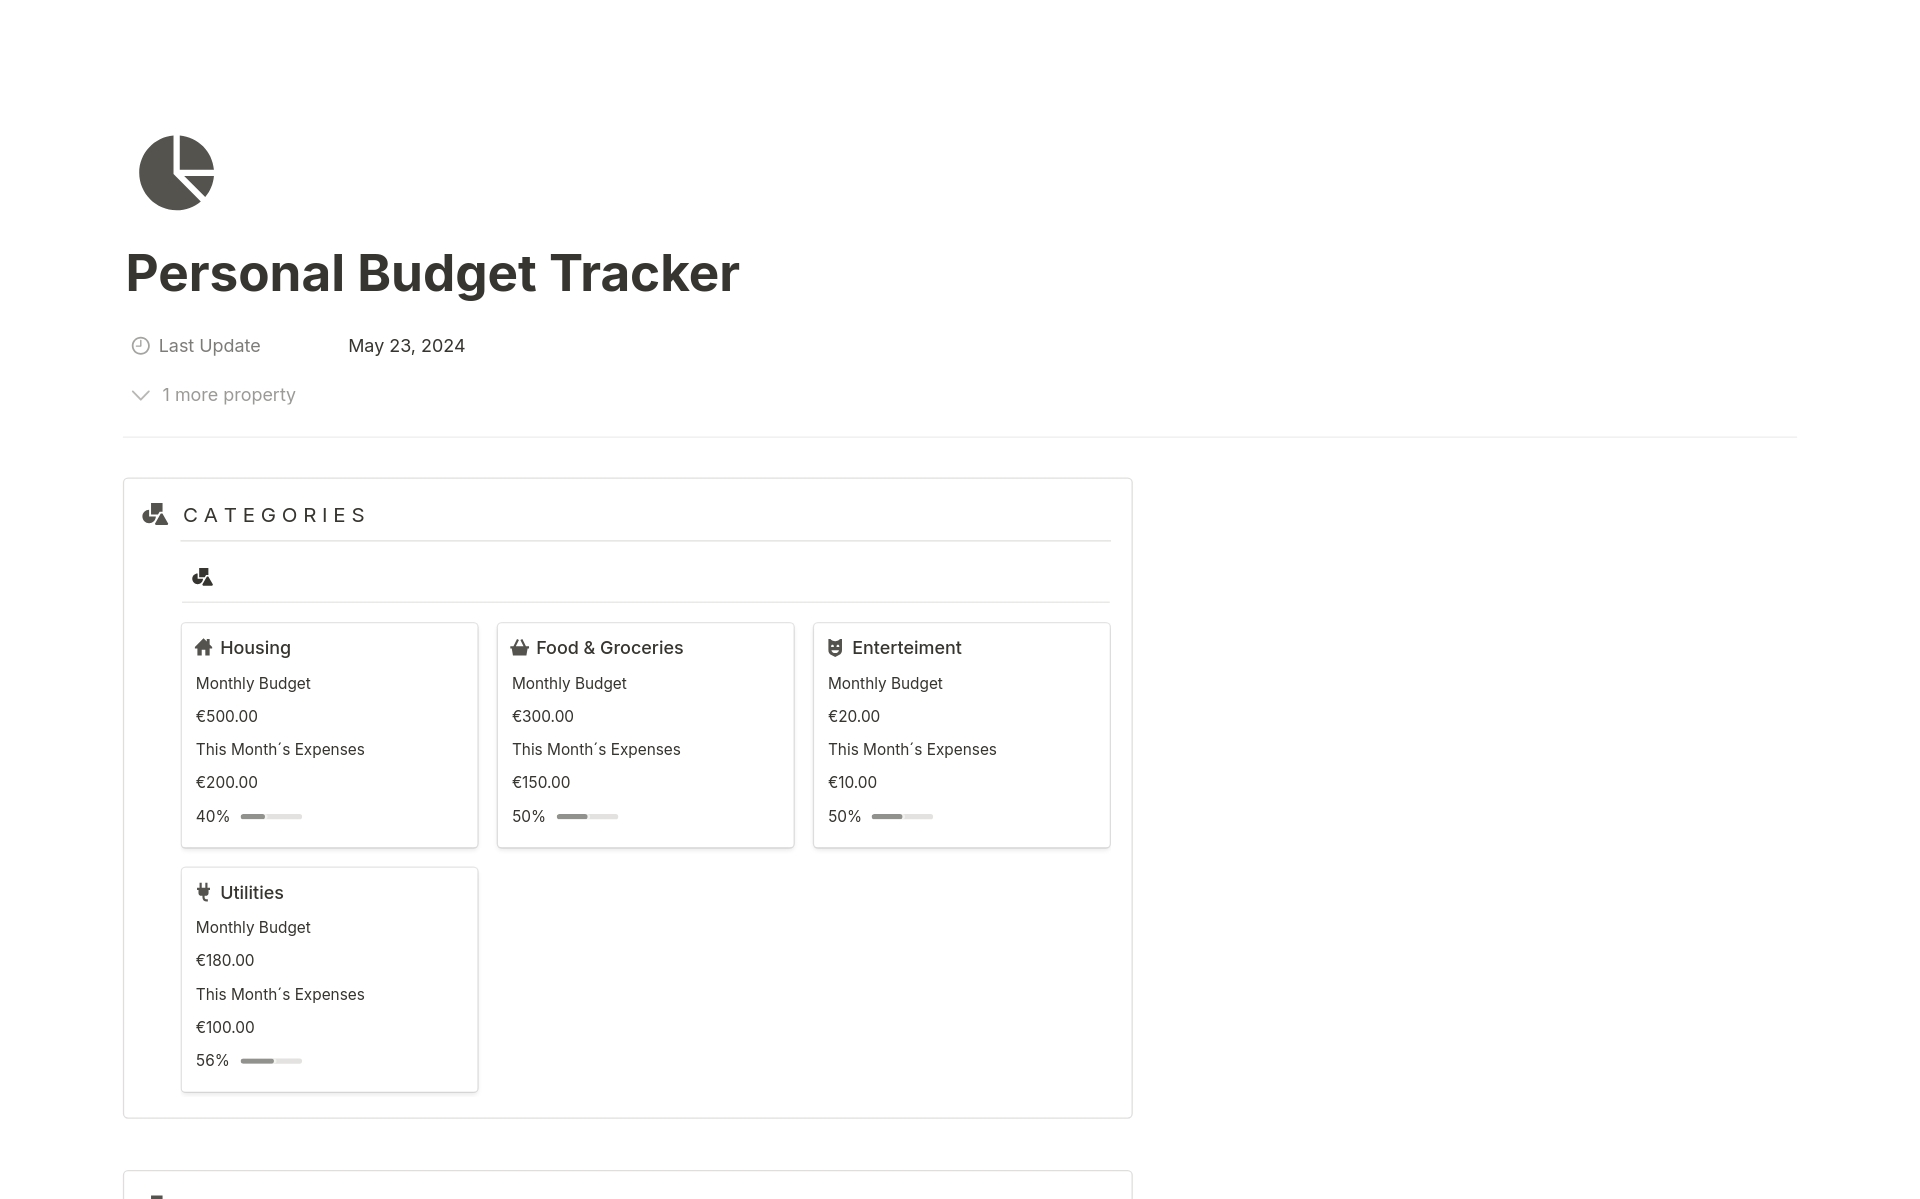 Vista previa de plantilla para Personal Budget Tracker